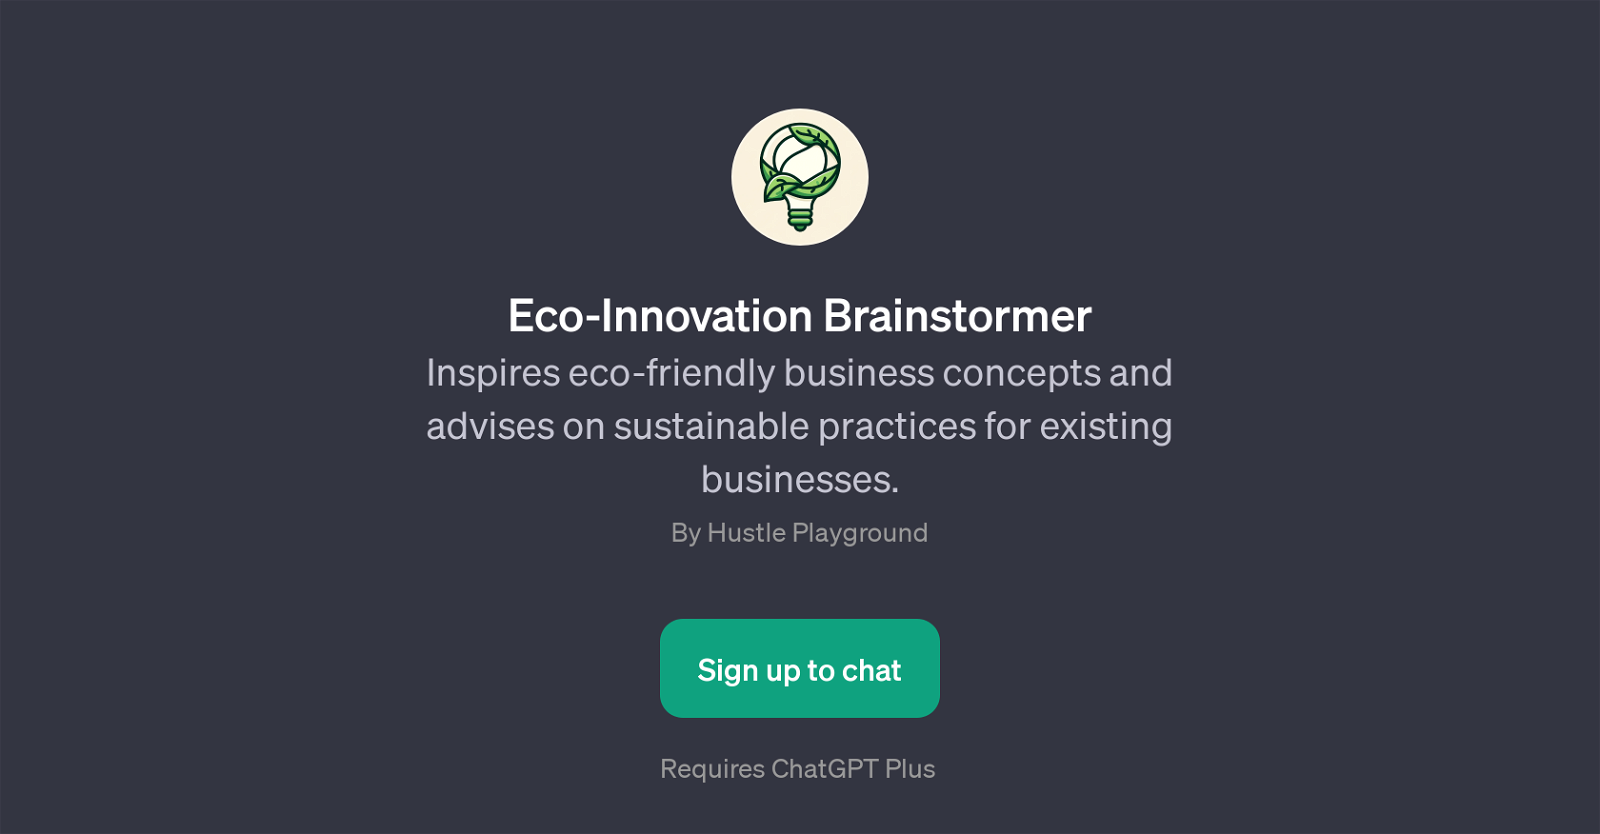 Eco-Innovation Brainstormer website